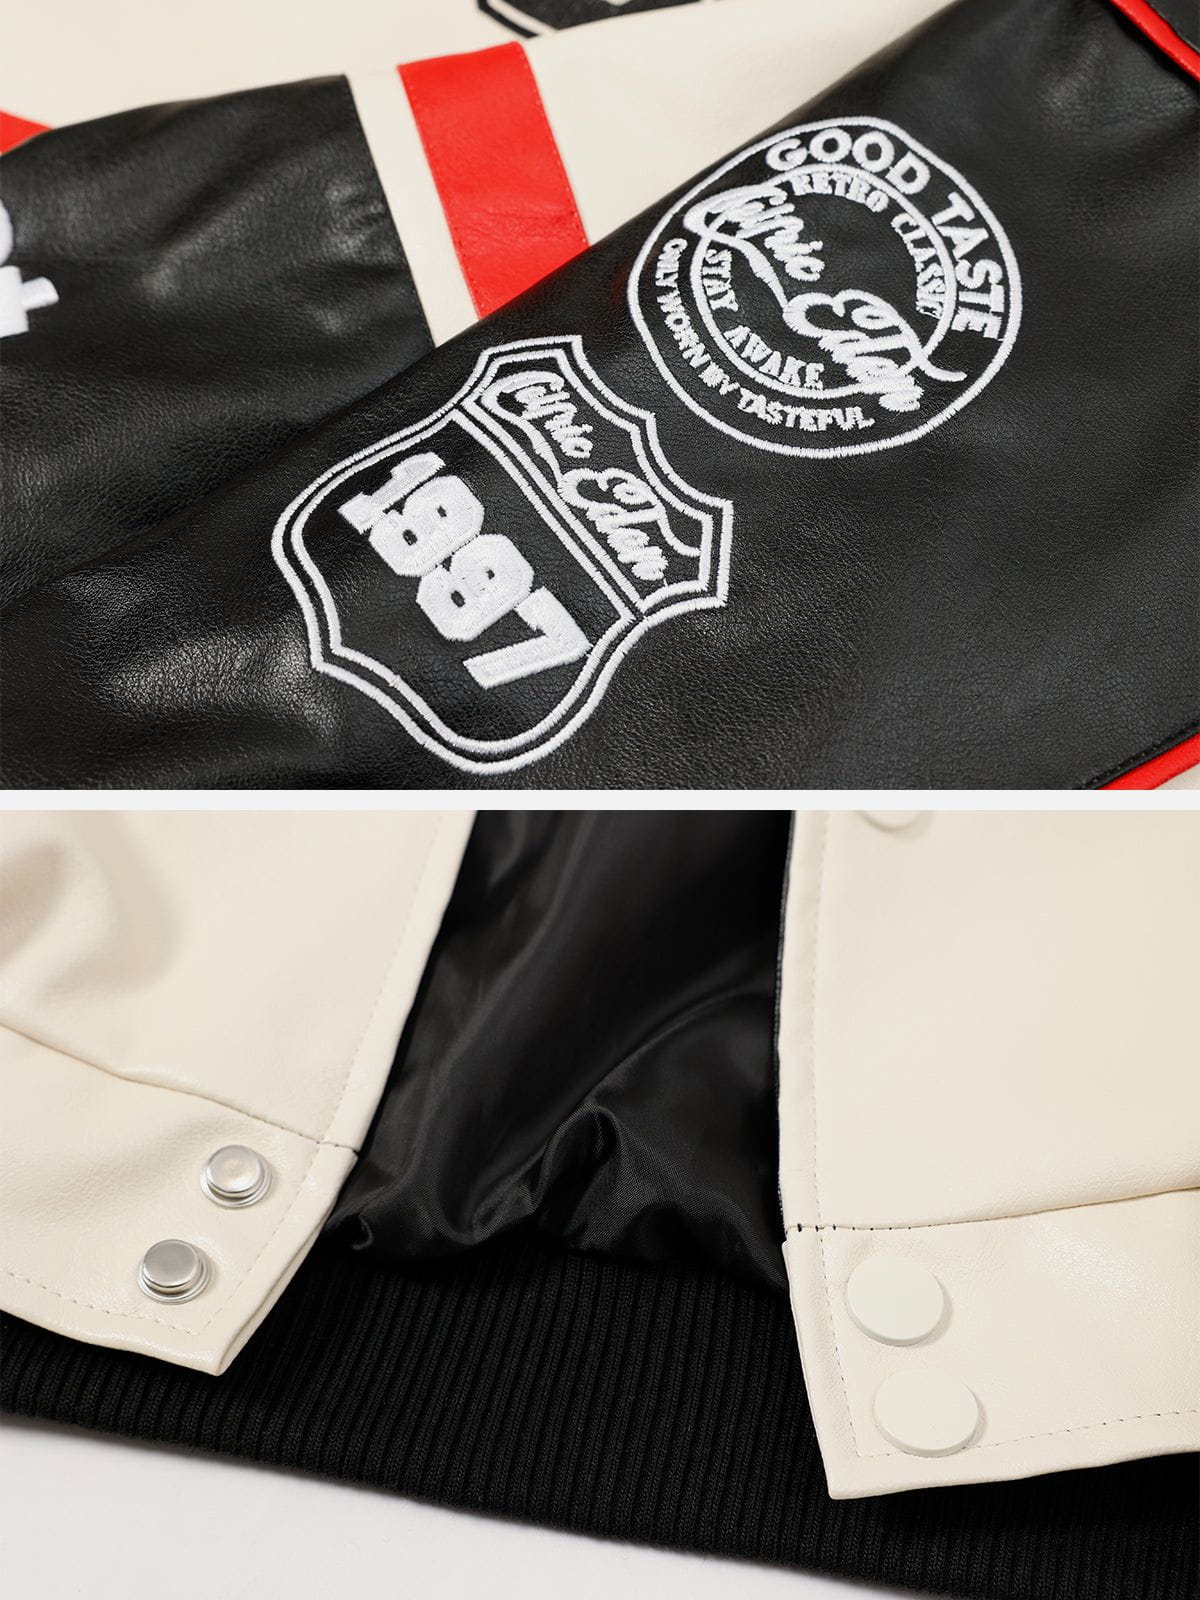 Majesda® - Stitching Color Motorcycle Jacket outfit ideas, streetwear fashion - majesda.com